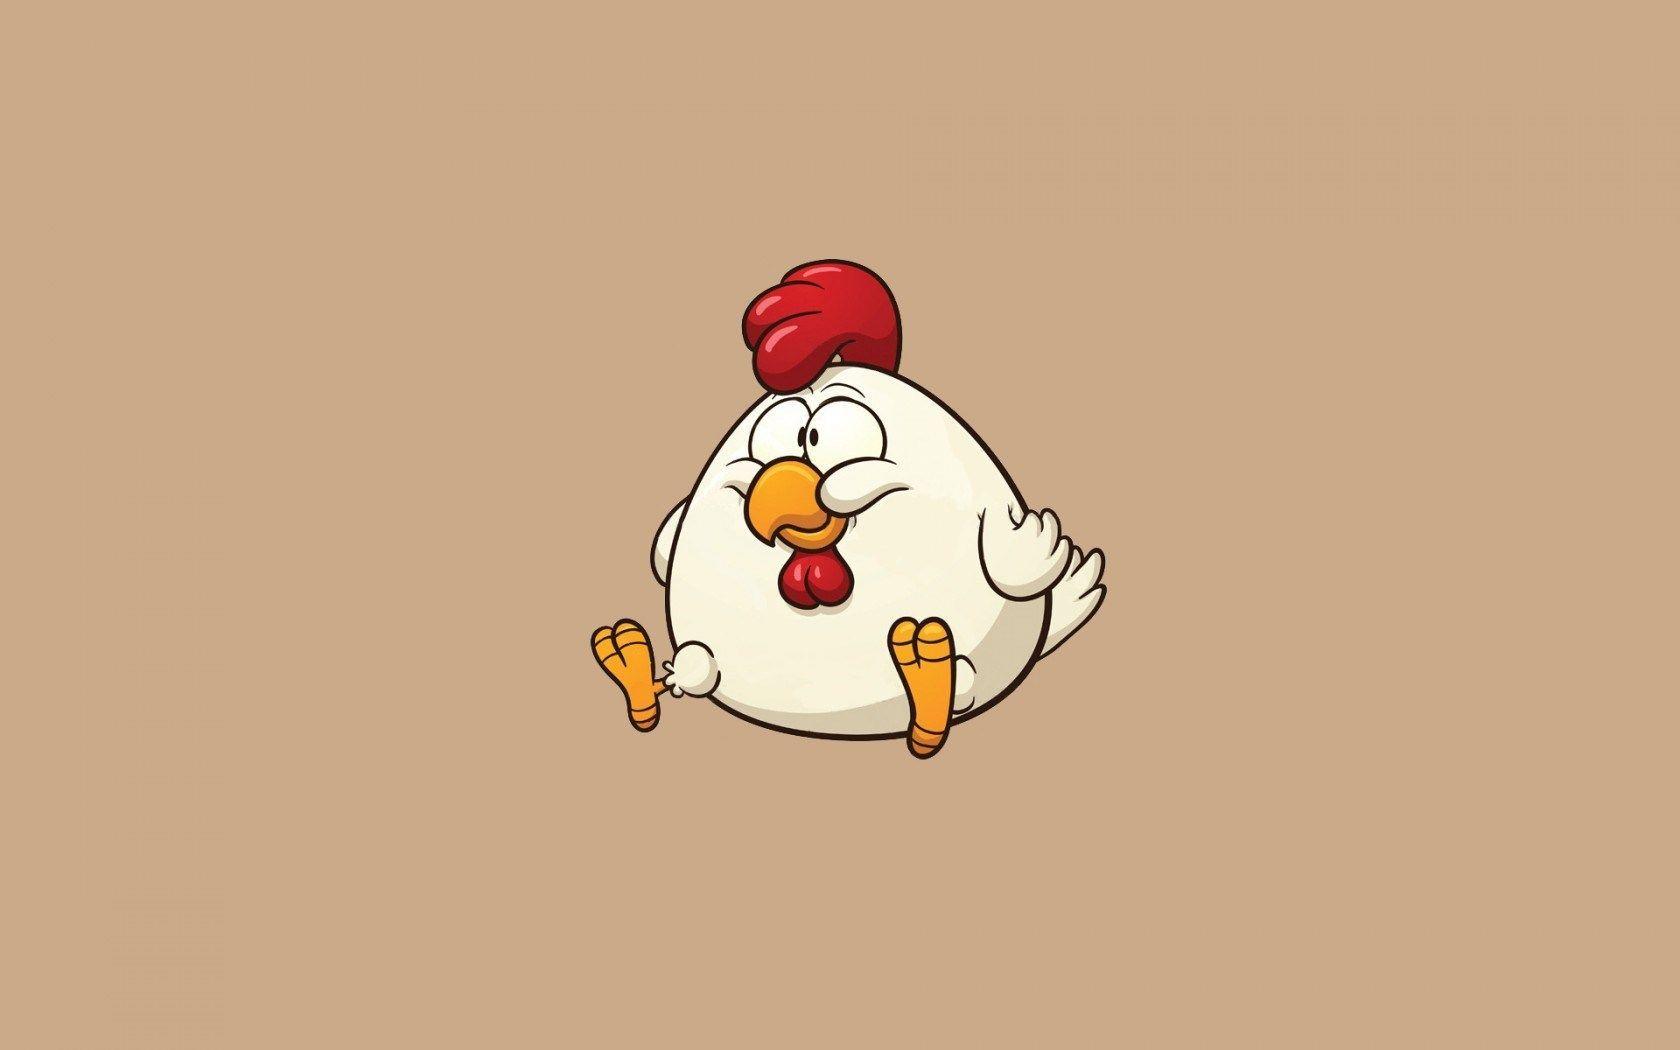 cute cartoon chicken